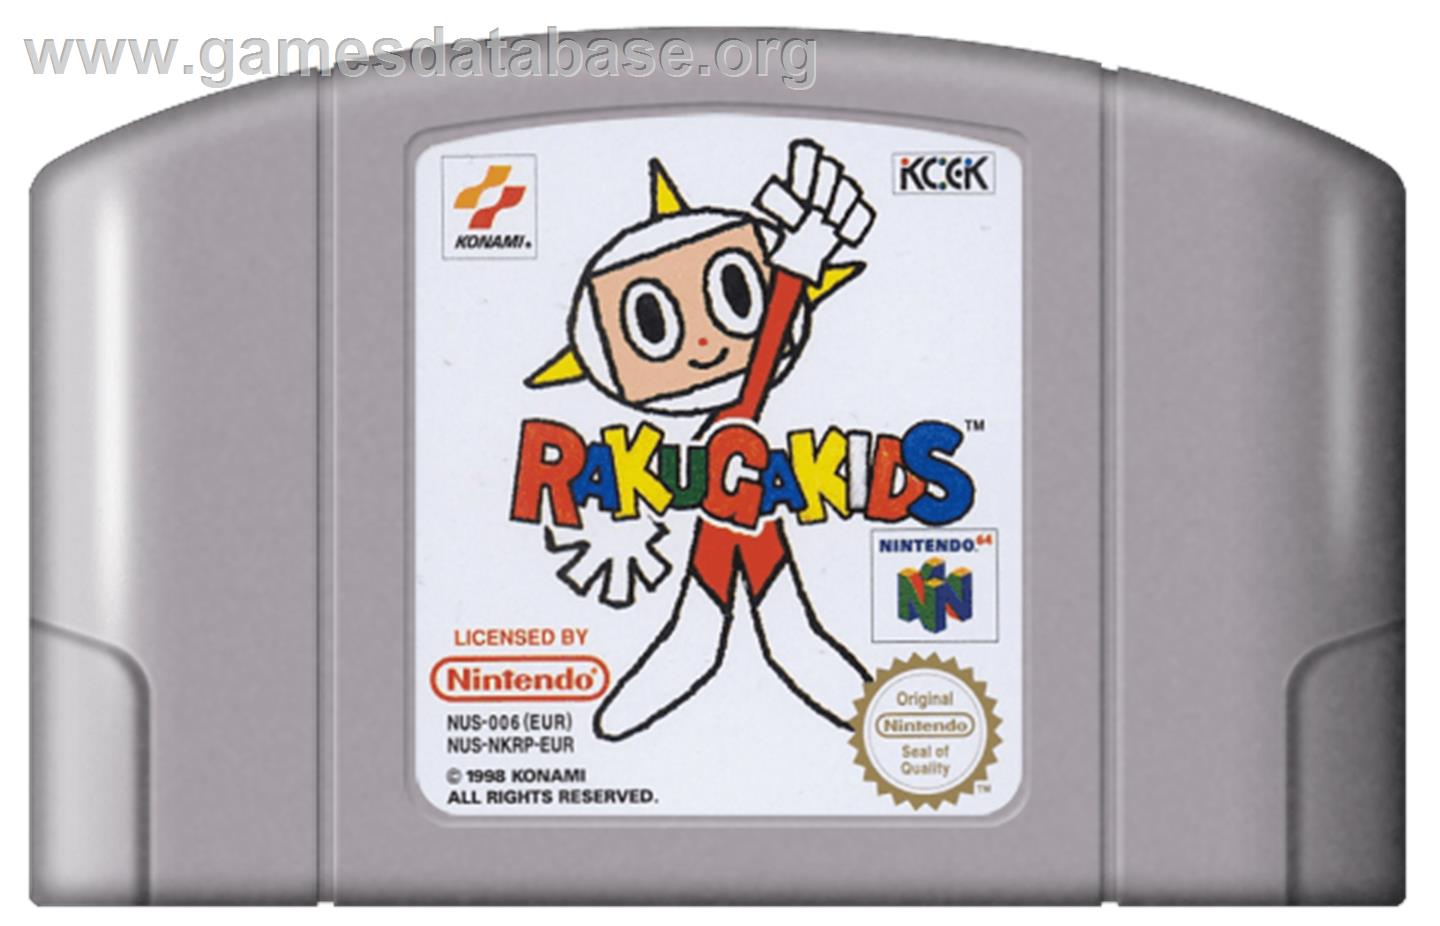 Rakugakids - Nintendo N64 - Artwork - Cartridge